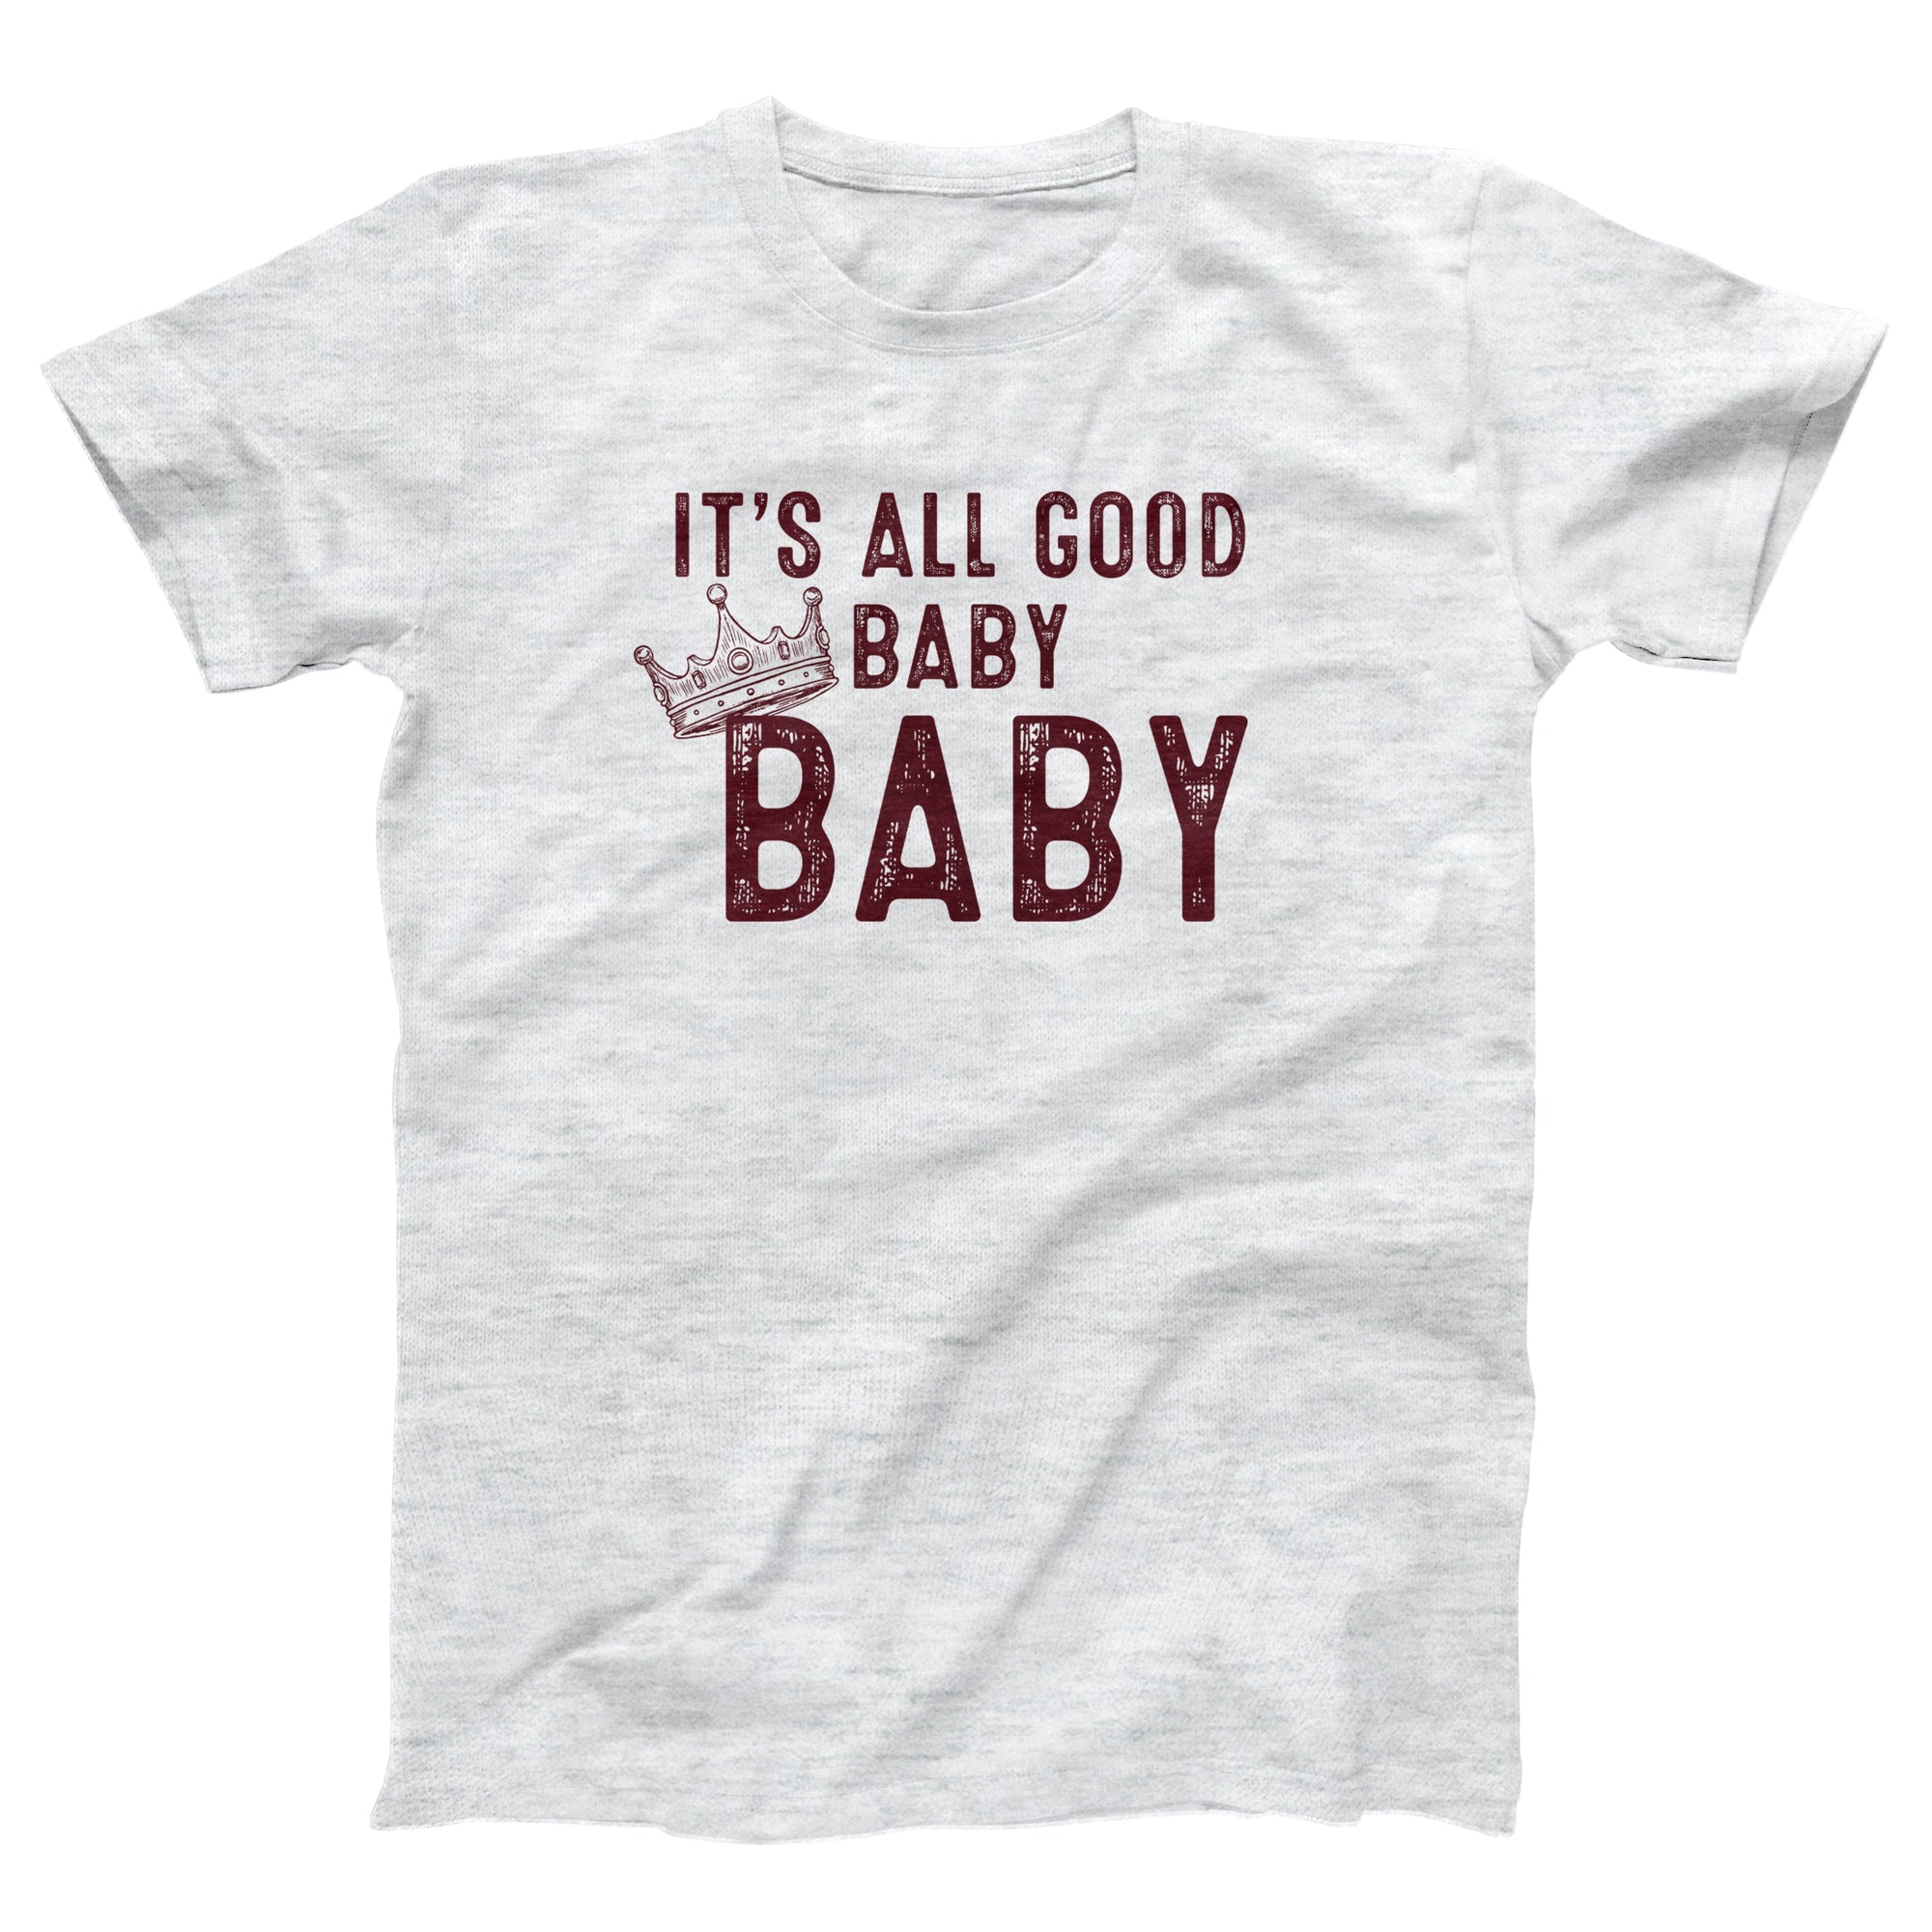 It's All Good Baby Baby Adult Unisex T-Shirt - anishphilip